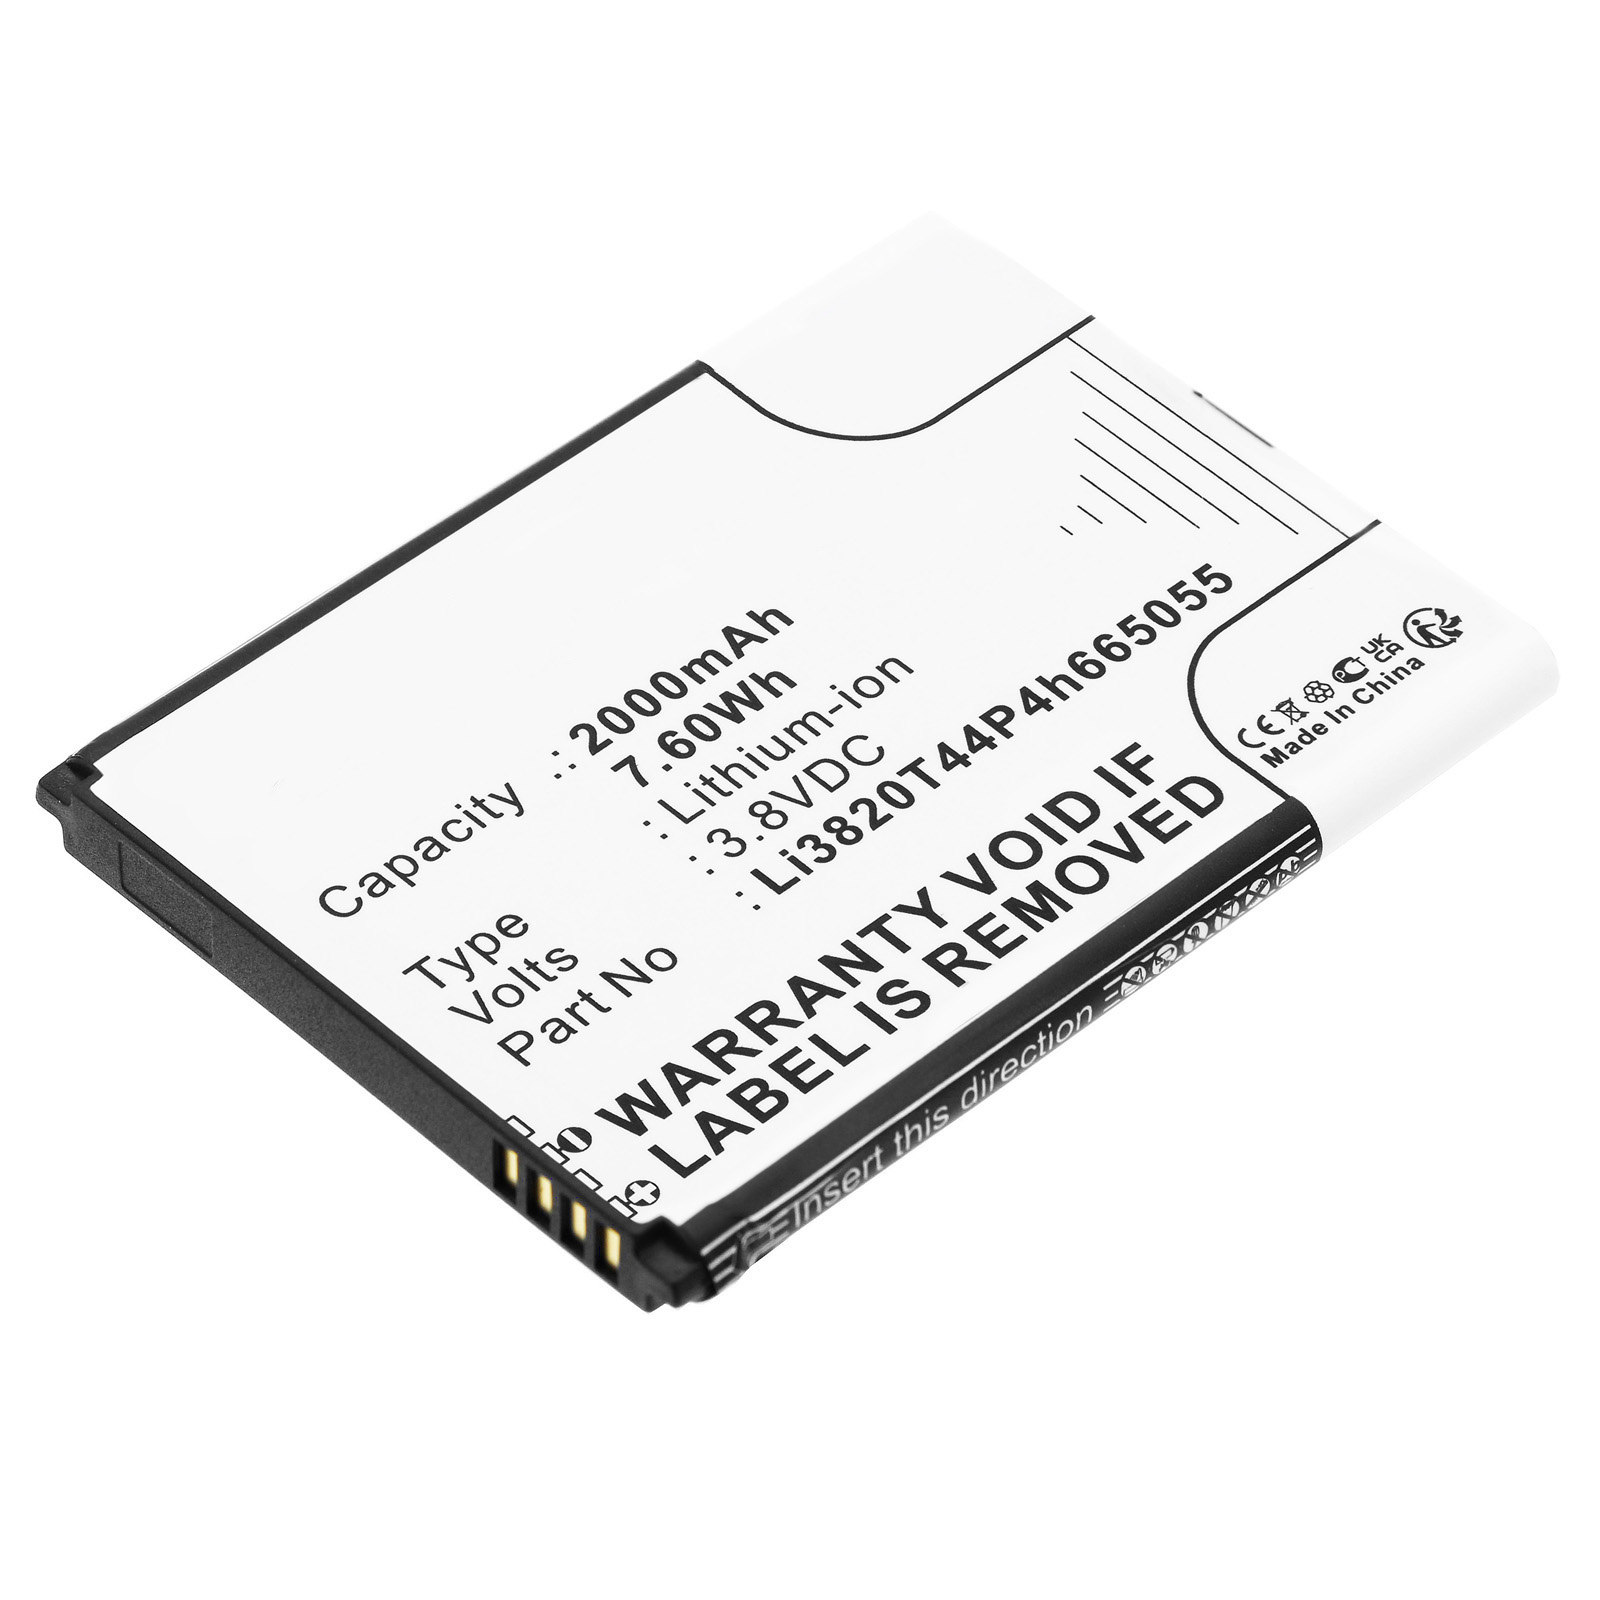 Synergy Digital Wifi Hotspot Battery, Compatible with ZTE Li3820T44P4h665055 Wifi Hotspot Battery (Li-ion, 3.8V, 2000mAh)